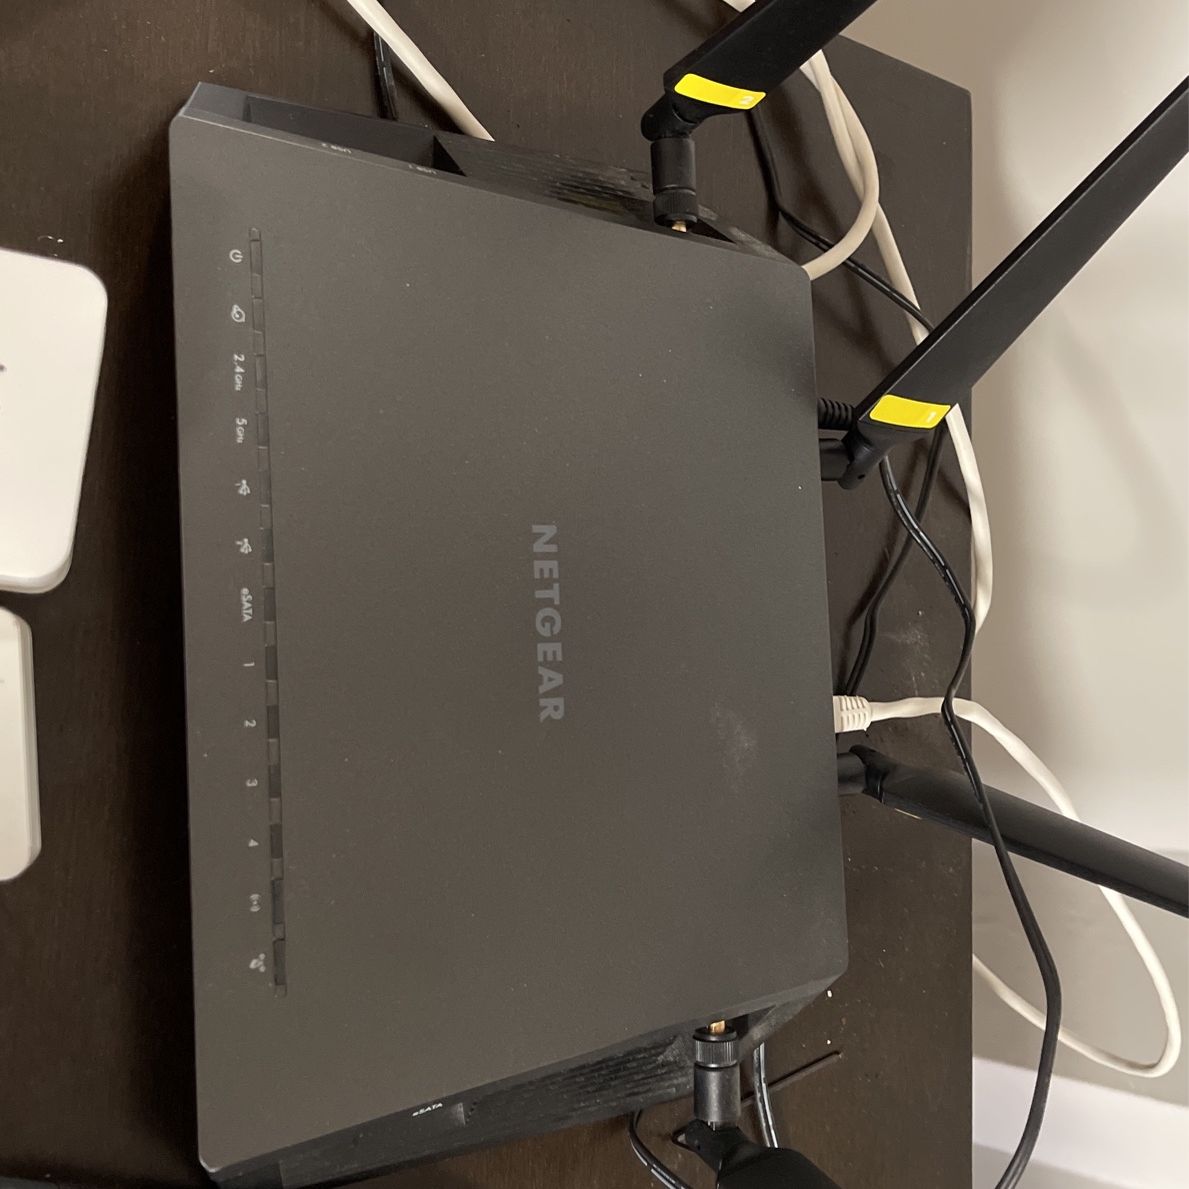 NETGEAR Nighthawk X4 Smart WiFi Router (R7500) Plus Some Extras